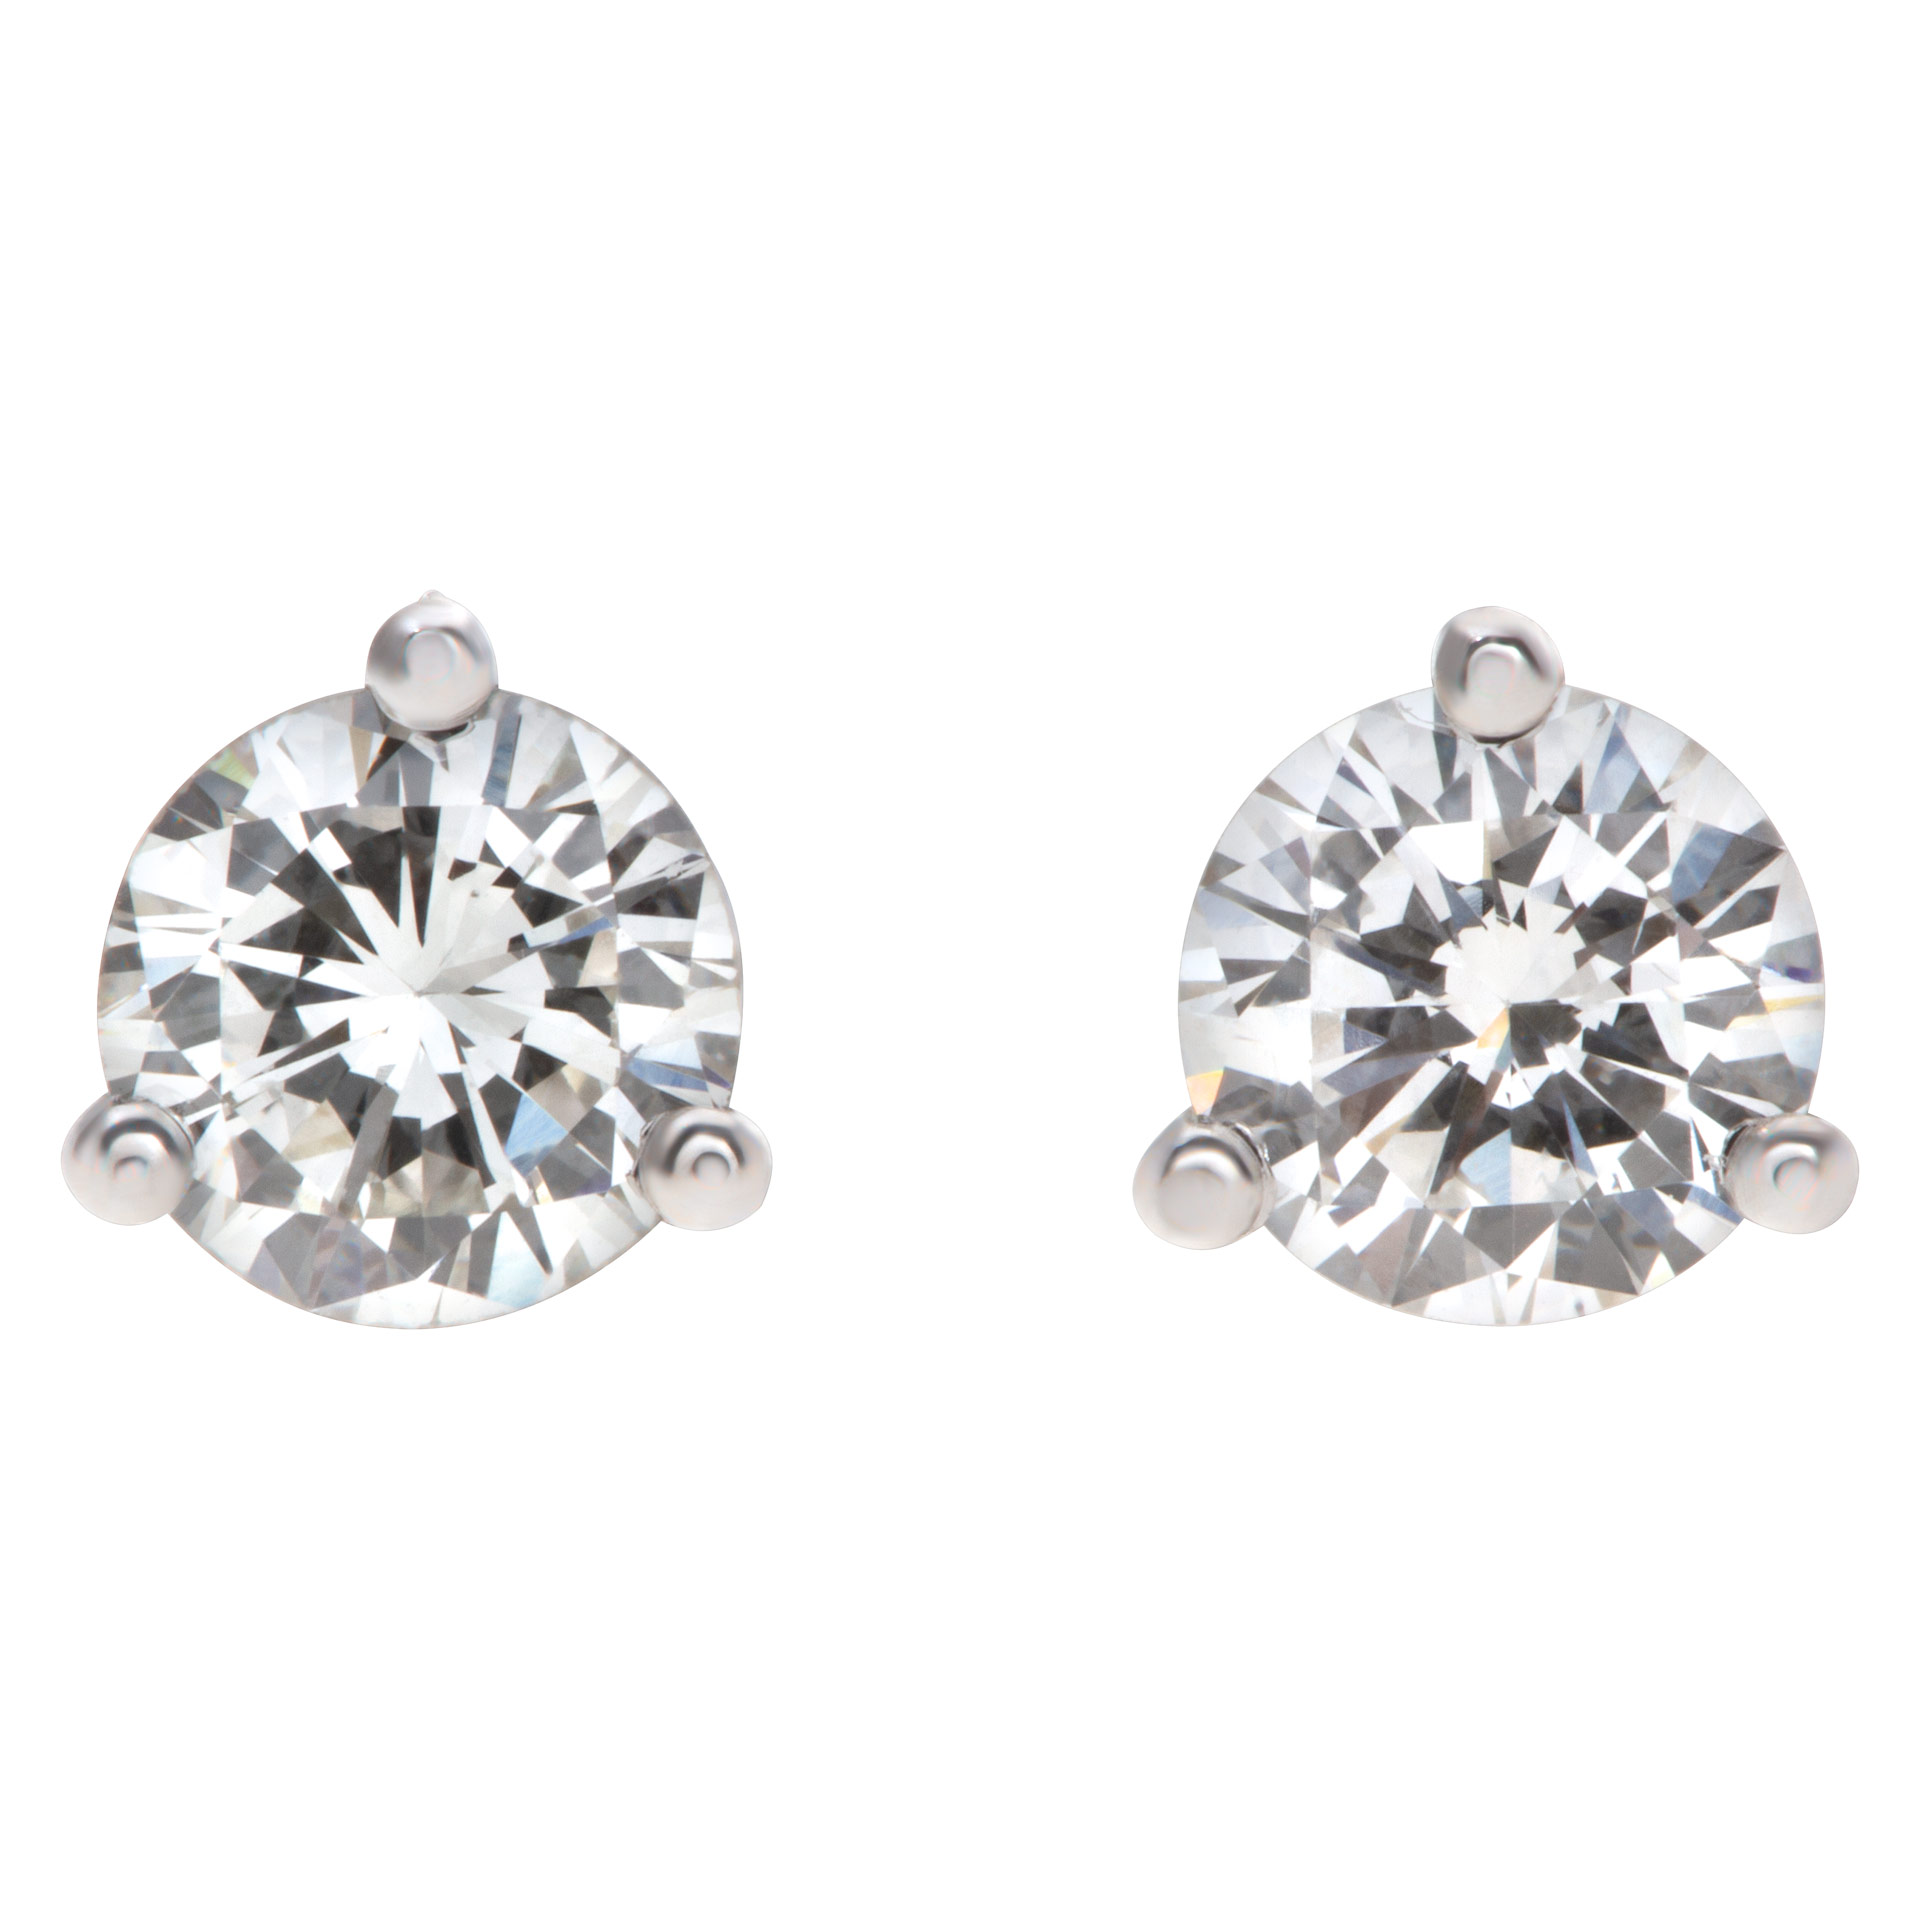 GIA diamond studs 0.33 carat (F color, VS2 clarity) and 0.33 carat (H color, VS2 clarity) image 1